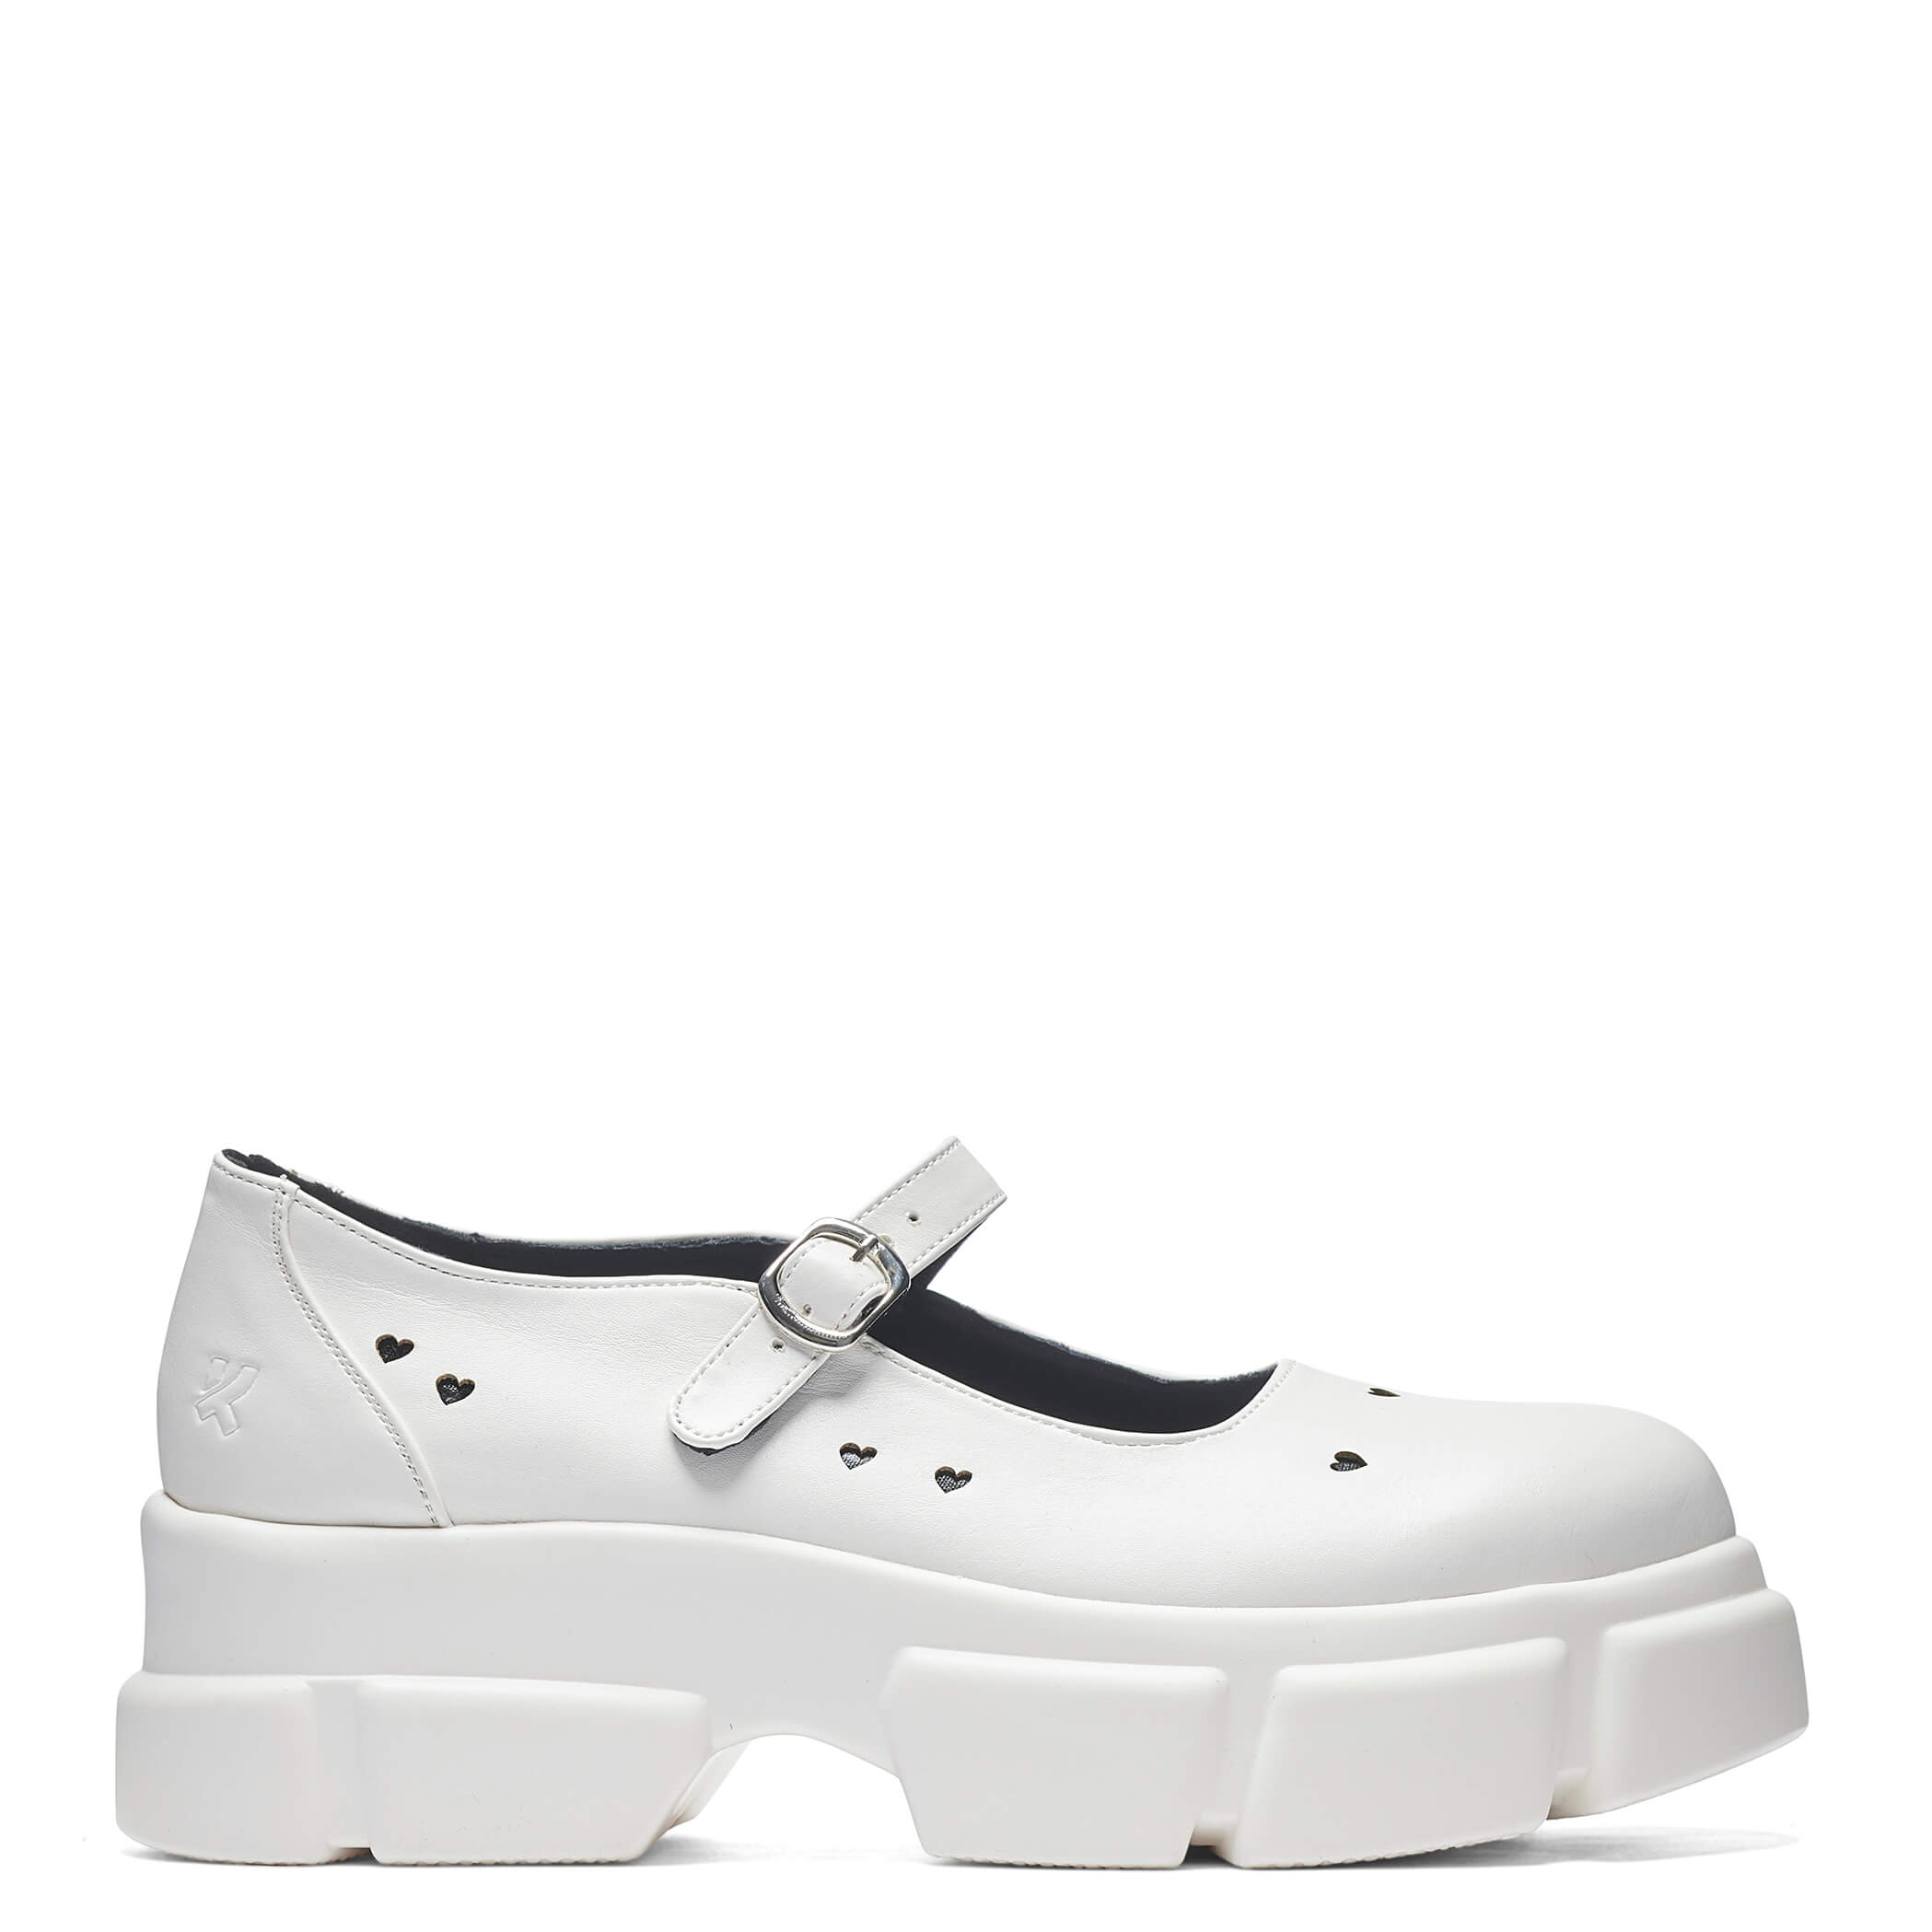 Harmony Heart Mary Jane Shoes - White – KOI footwear